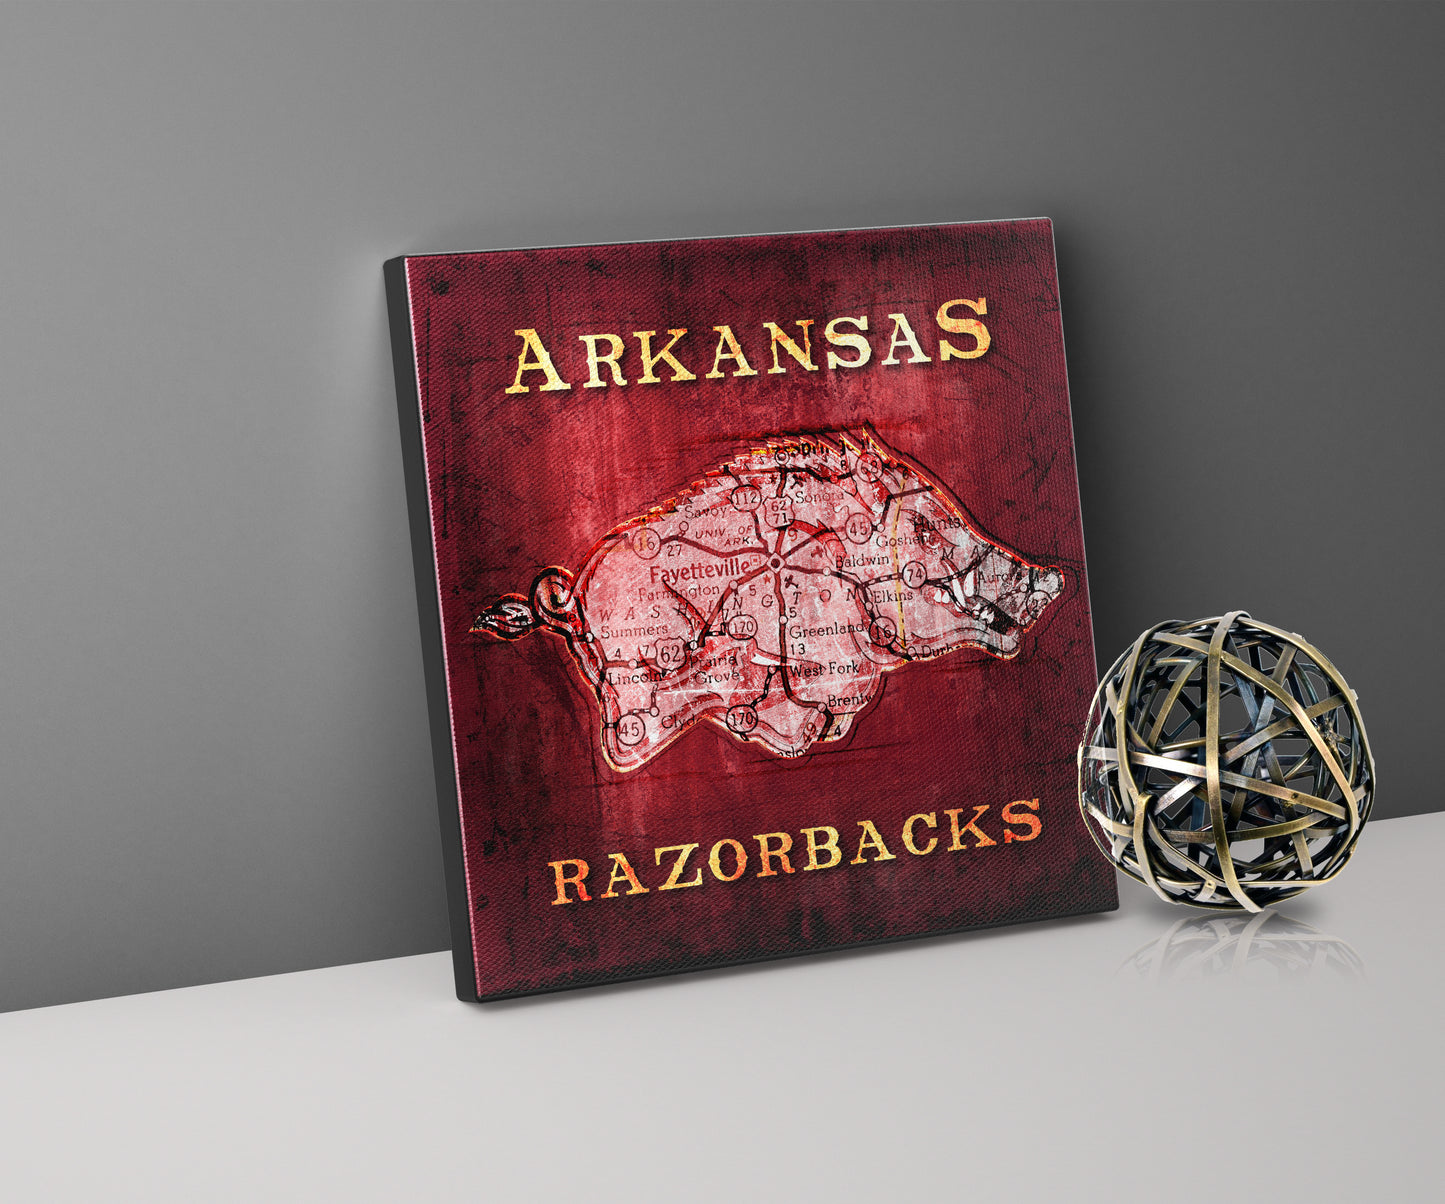 Arkansas Razorbacks Vintage Canvas Map